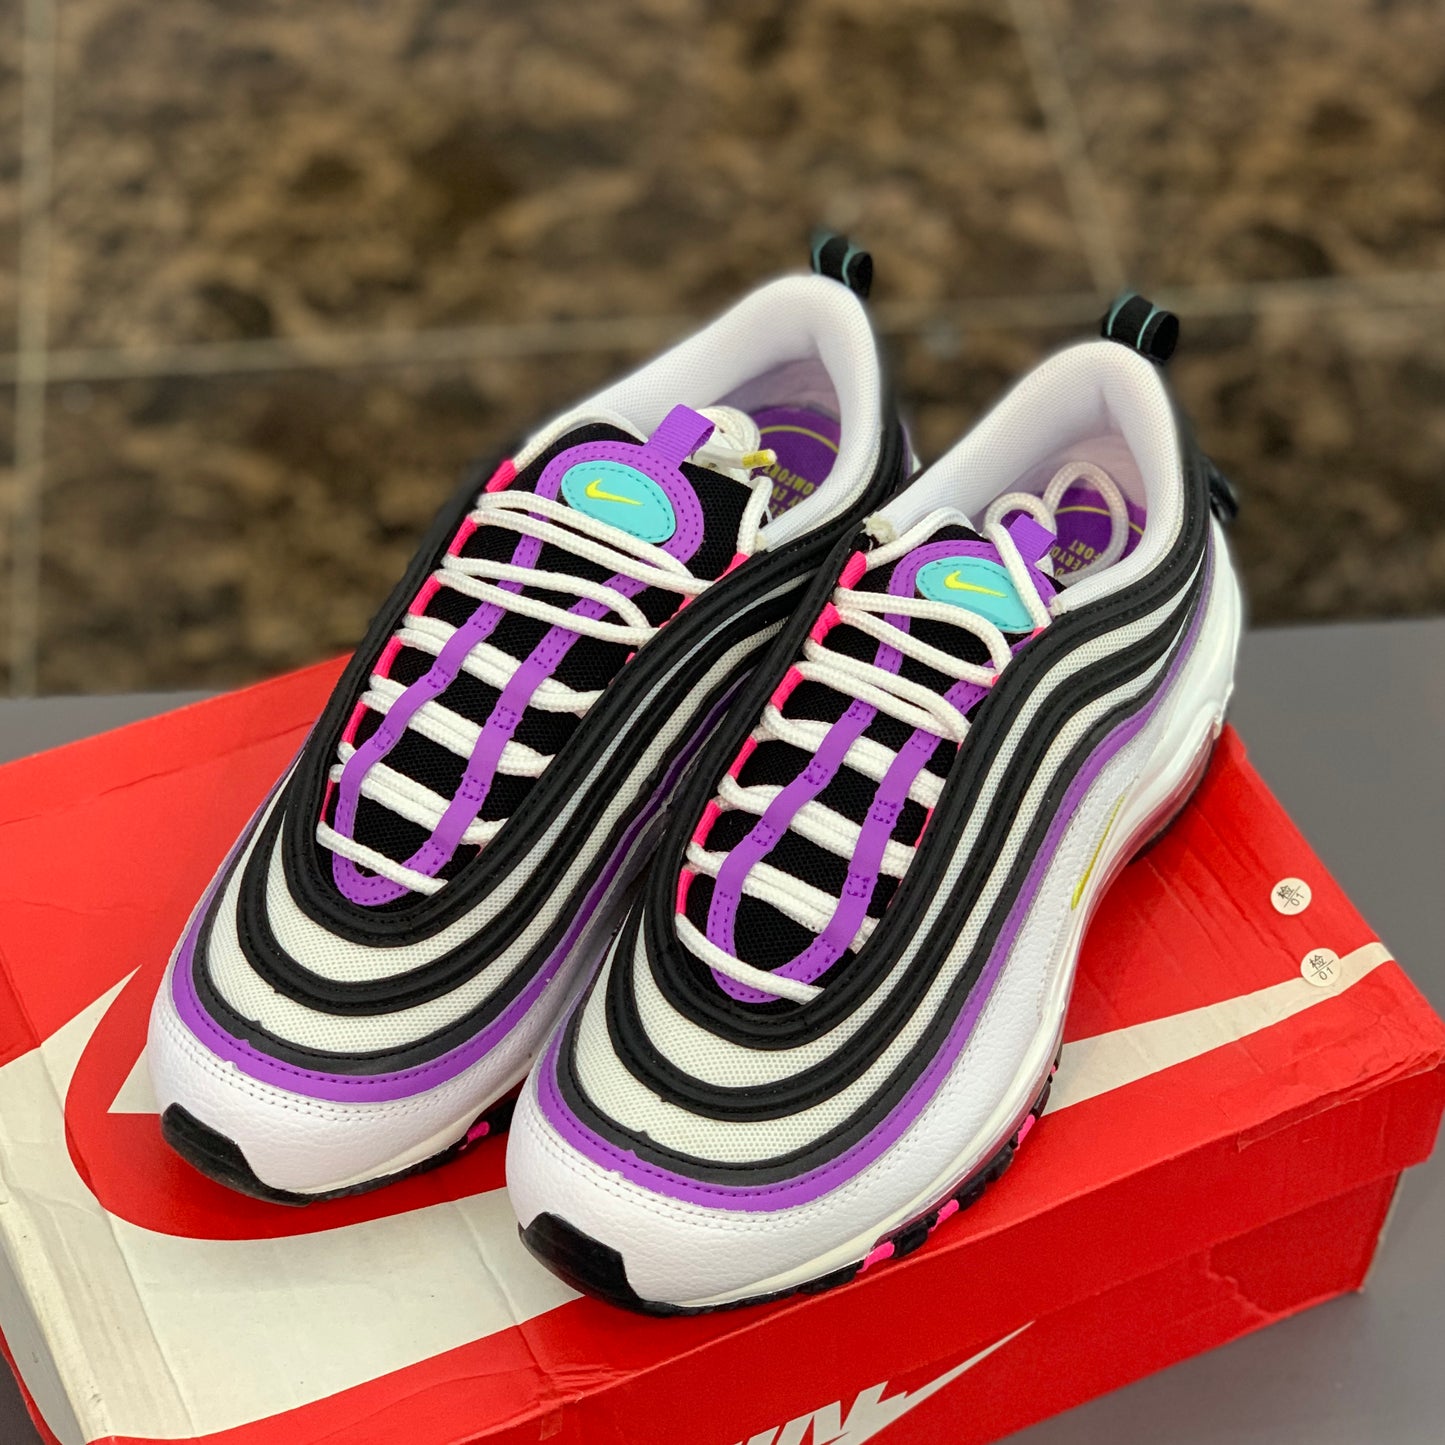 Nike Air Max 97 Bright Violet